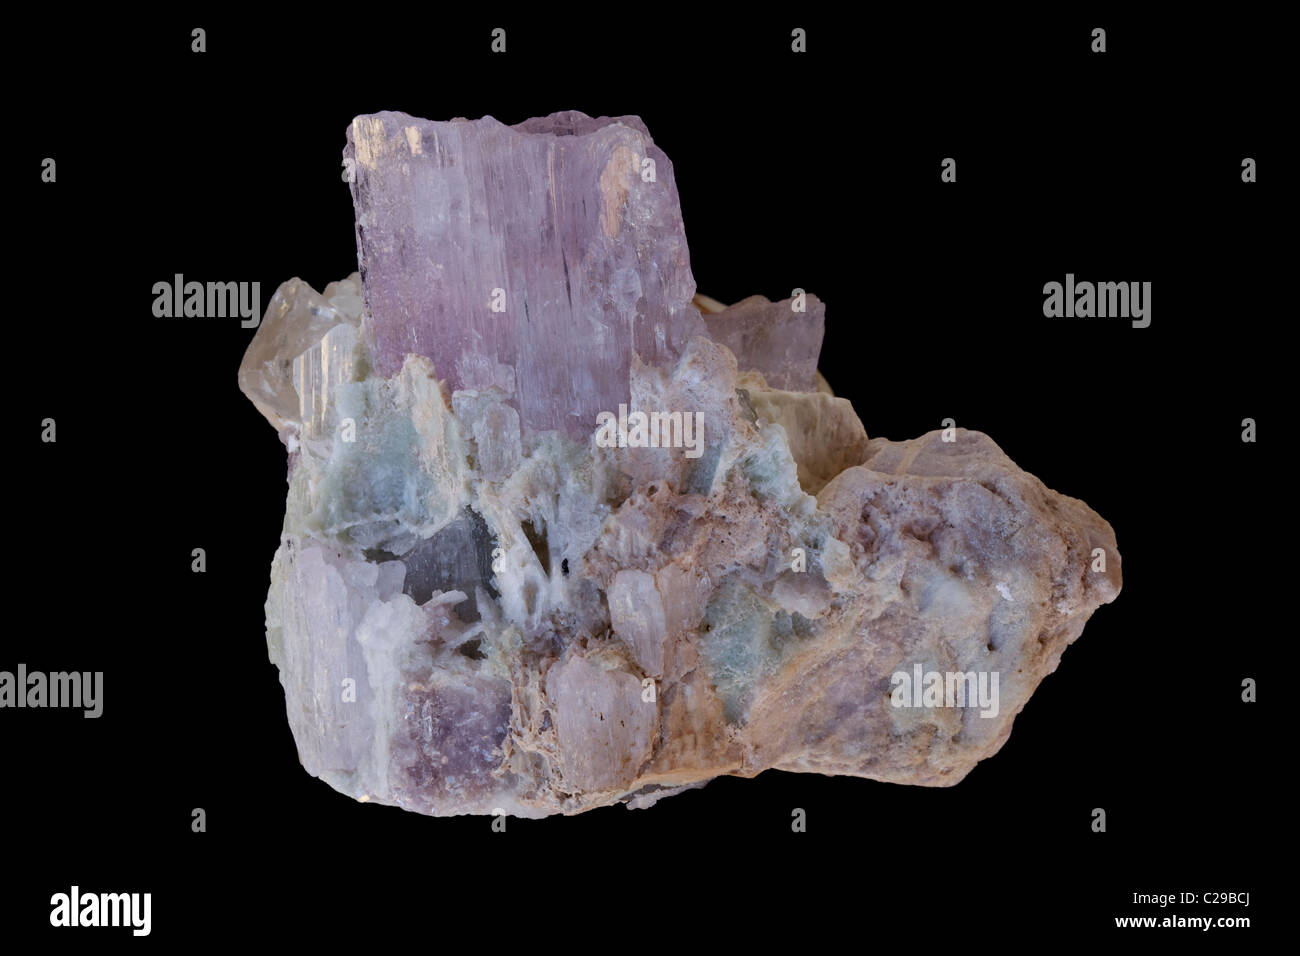 - Kunzite Laghman Afganistan - Mineral de litio - Es una rosa a la luz púrpura variedad del mineral spodumene Foto de stock